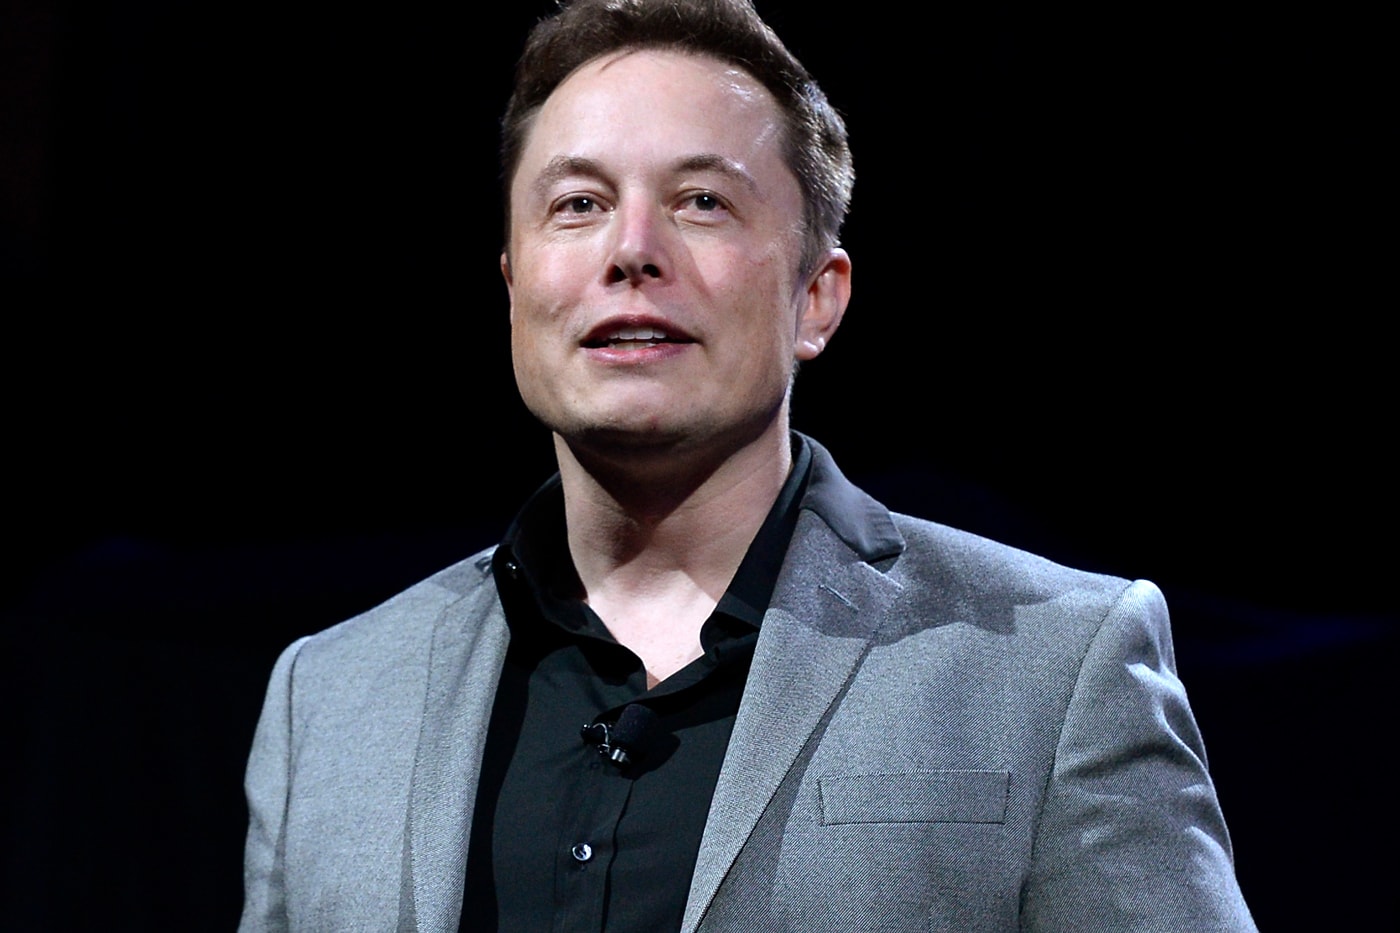 Elon Musk Tesla 750 Million Dollar Stock Option News tranche buy back stocks Electric Vehicles EVS Wall Street SpaceX Tech automotive 